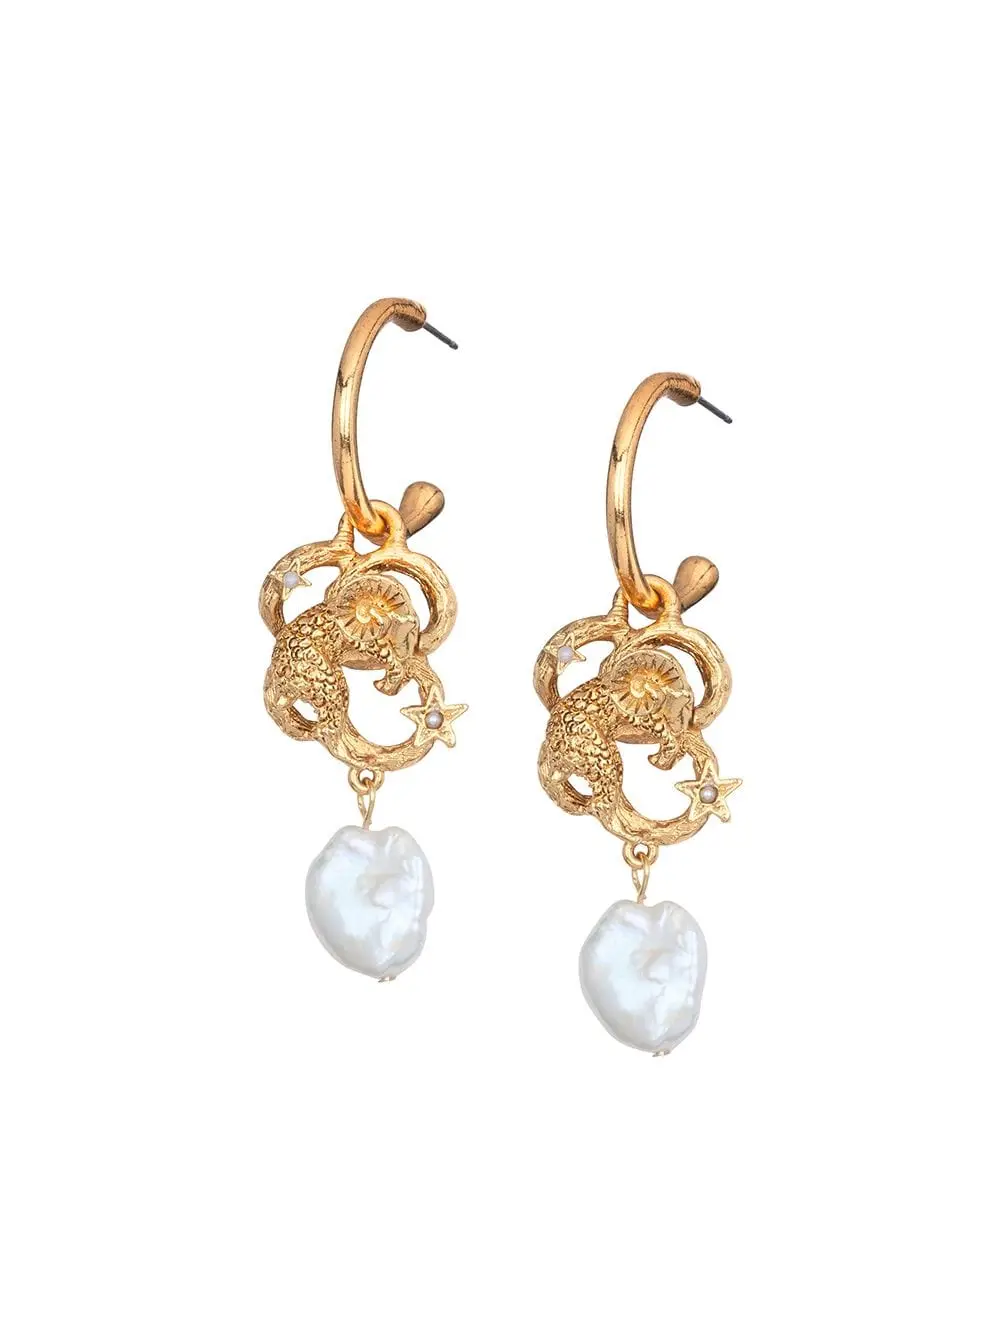 Fashionable and Elegant Temperament Geometric Earrings Jewelry